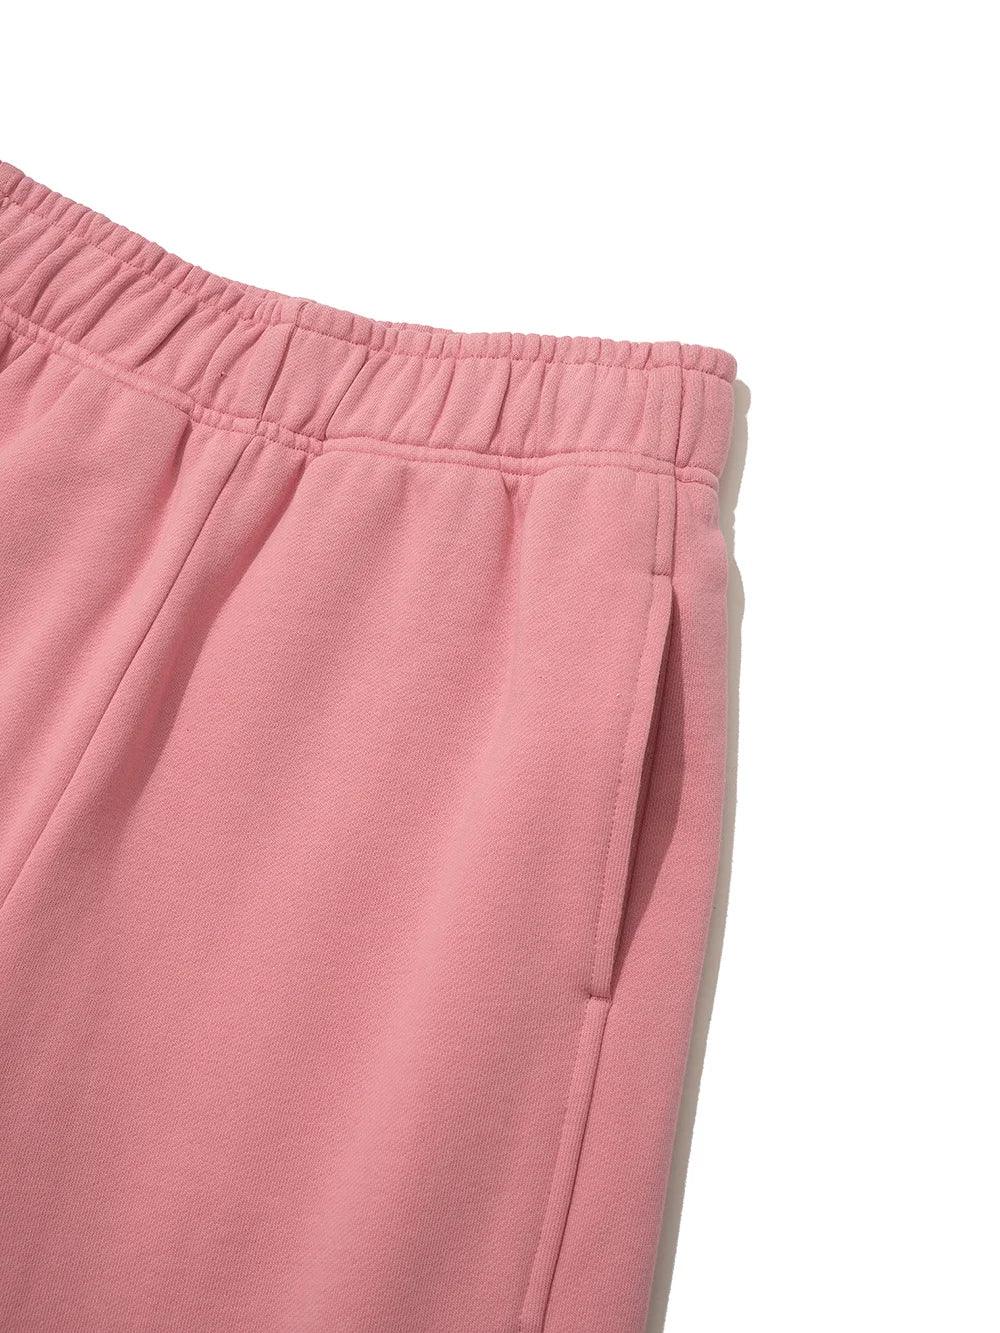 Partimento Rounding Sweatpants - Pink - bottoms